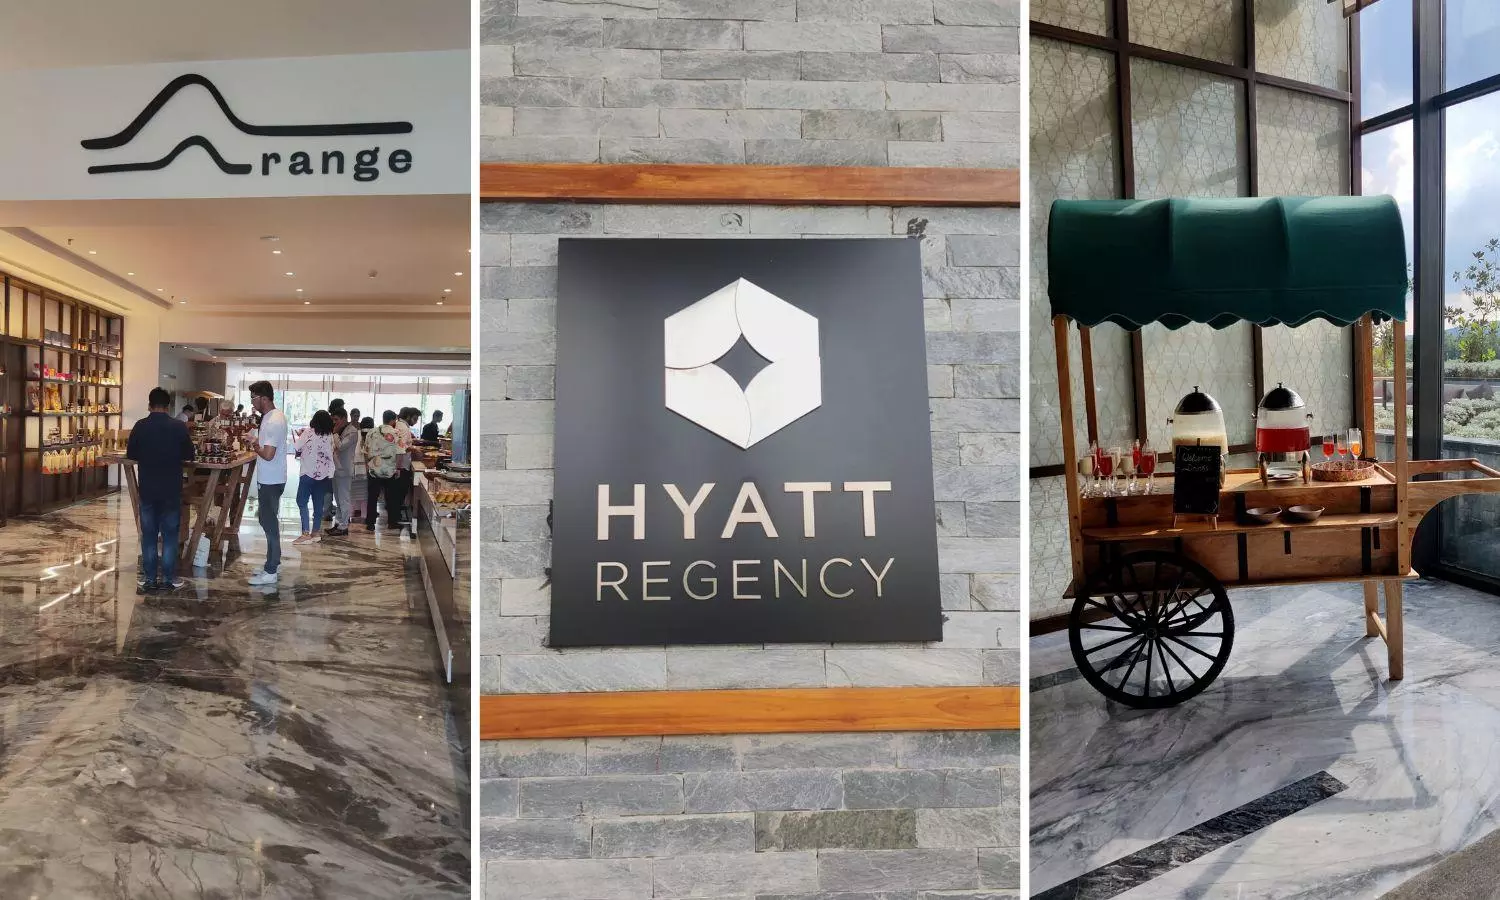 Hyatt Regency, Dehradun, promises a luxurious getaway among the mighty mountains